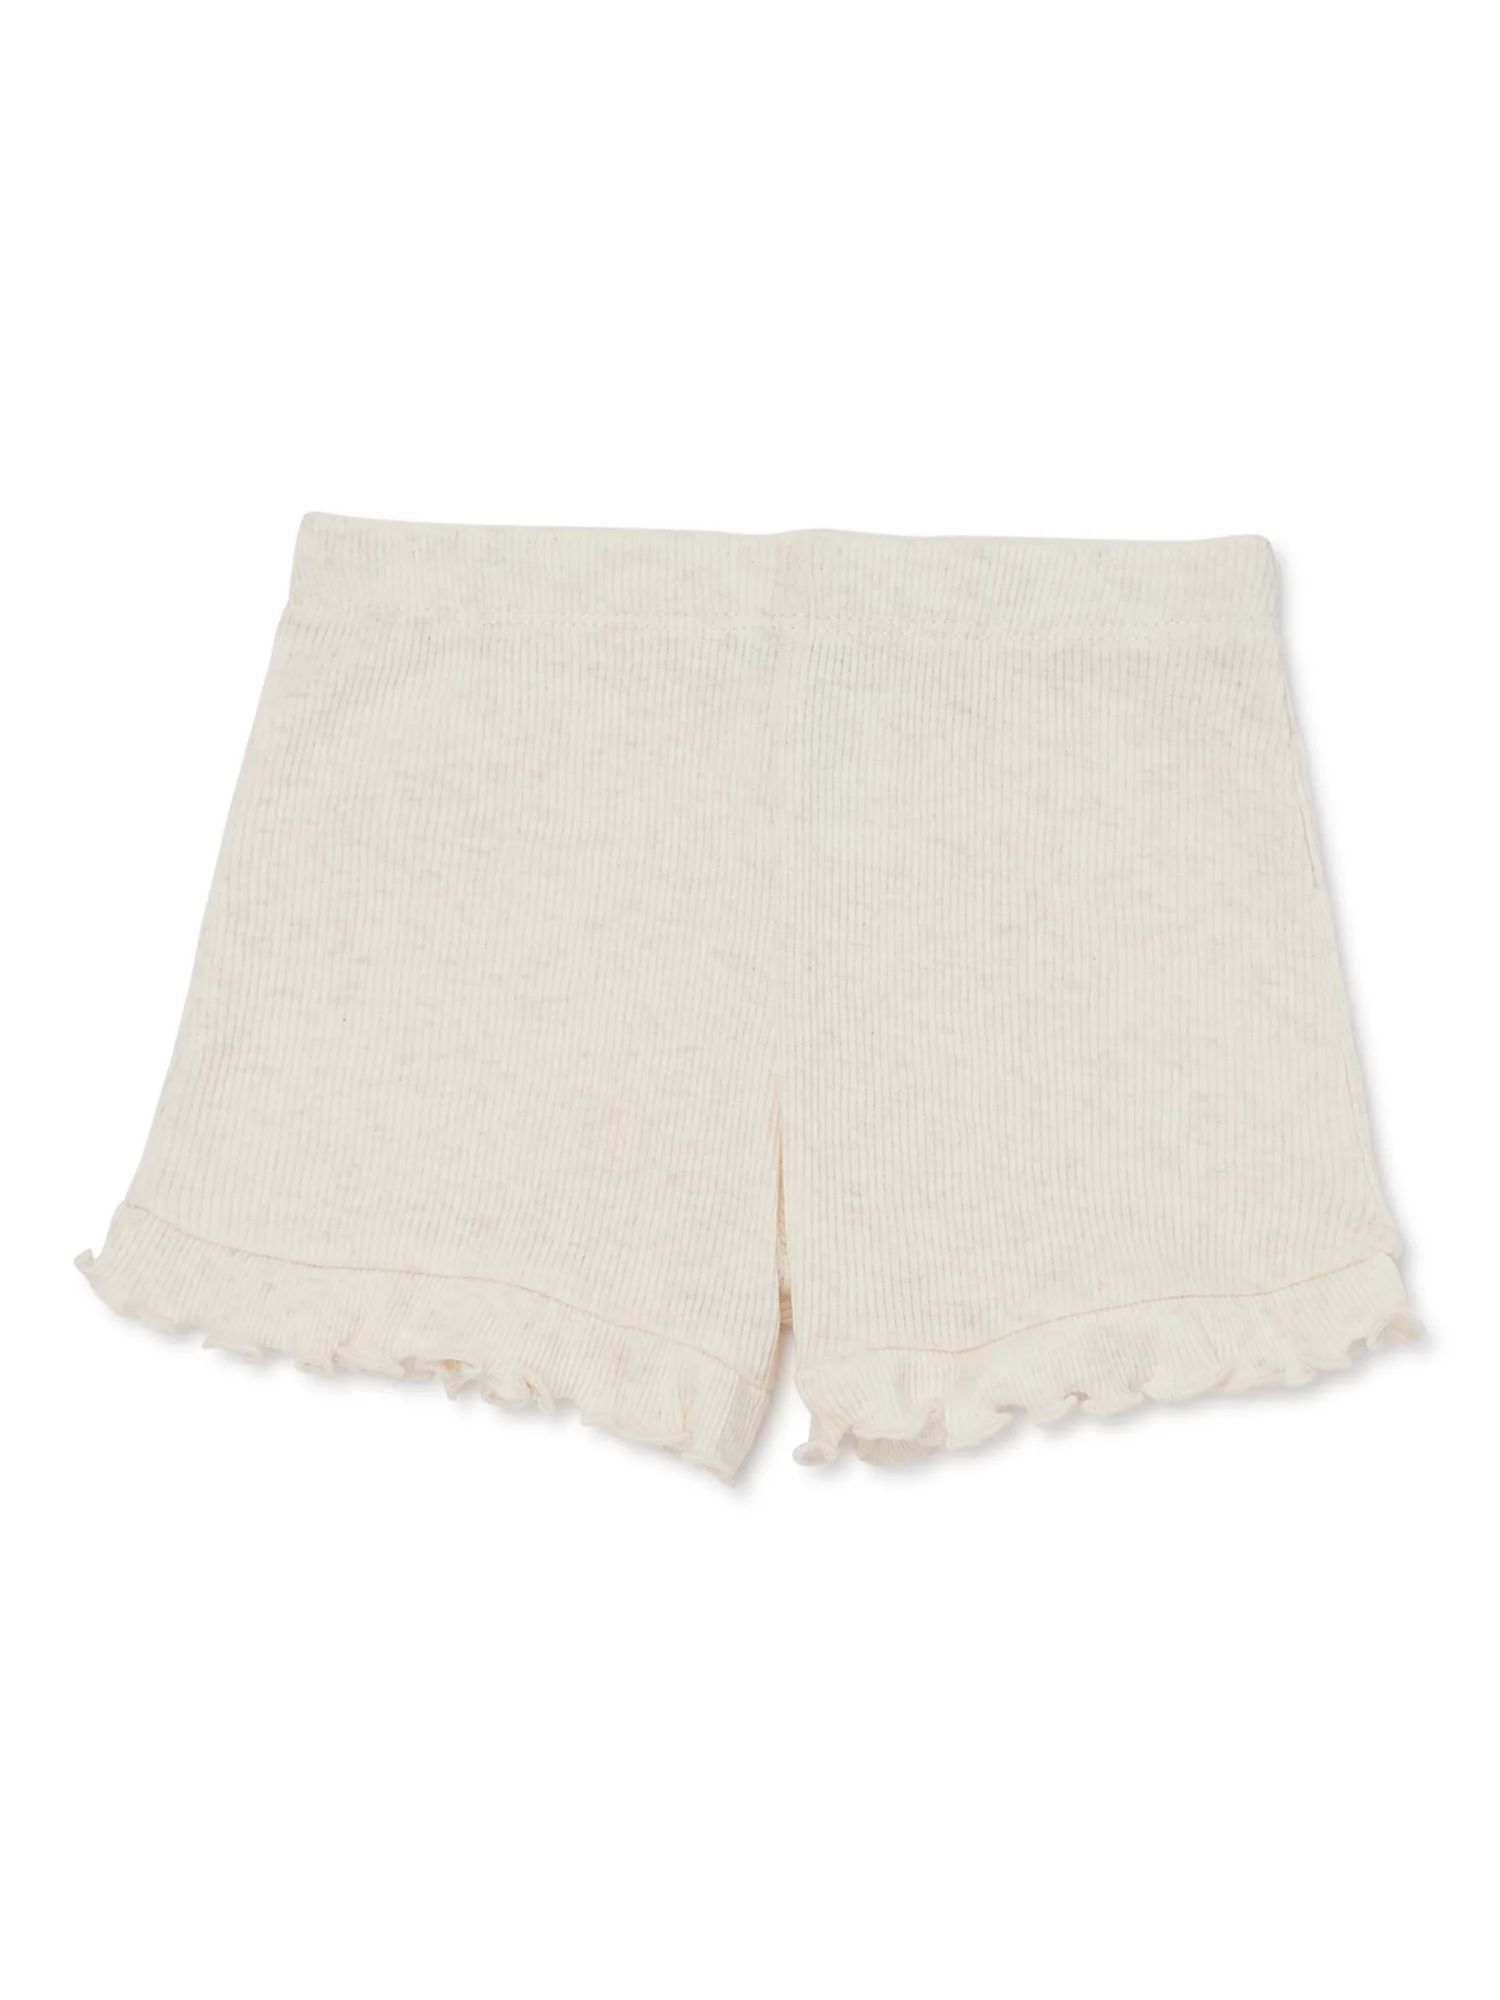 Garanimals Baby Girl Ruffle Edge Solid Shorts, Sizes 0-24 Months | Walmart (US)